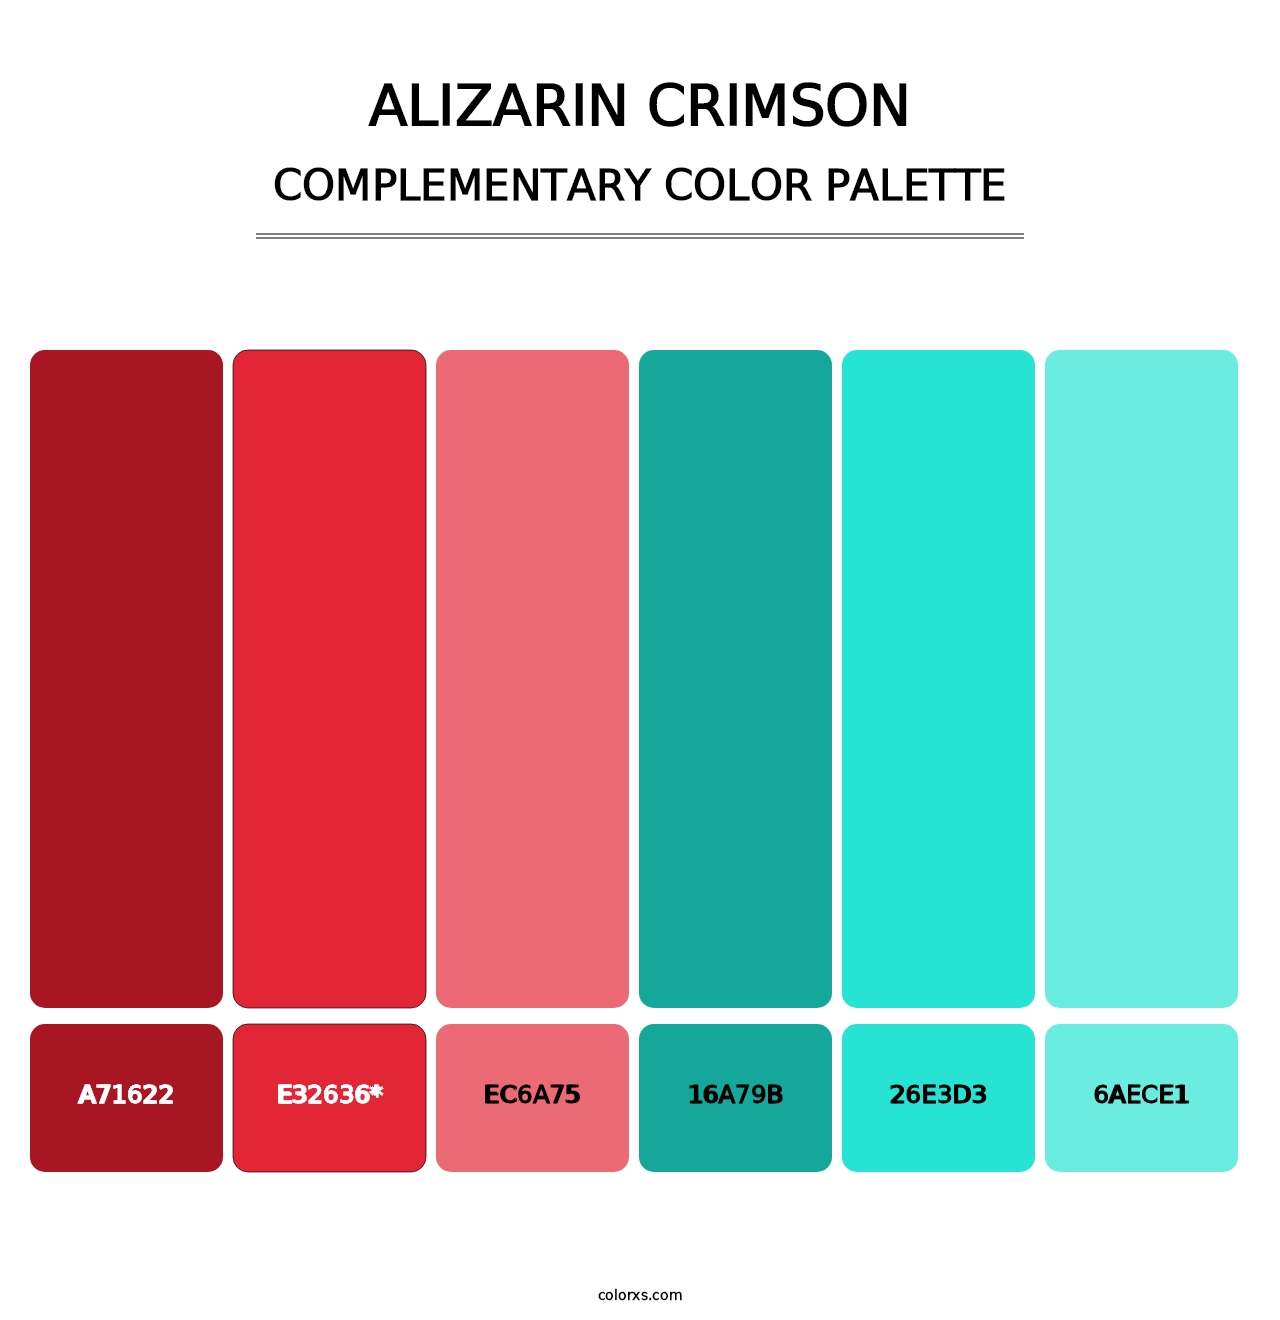 Alizarin Crimson - Complementary Color Palette